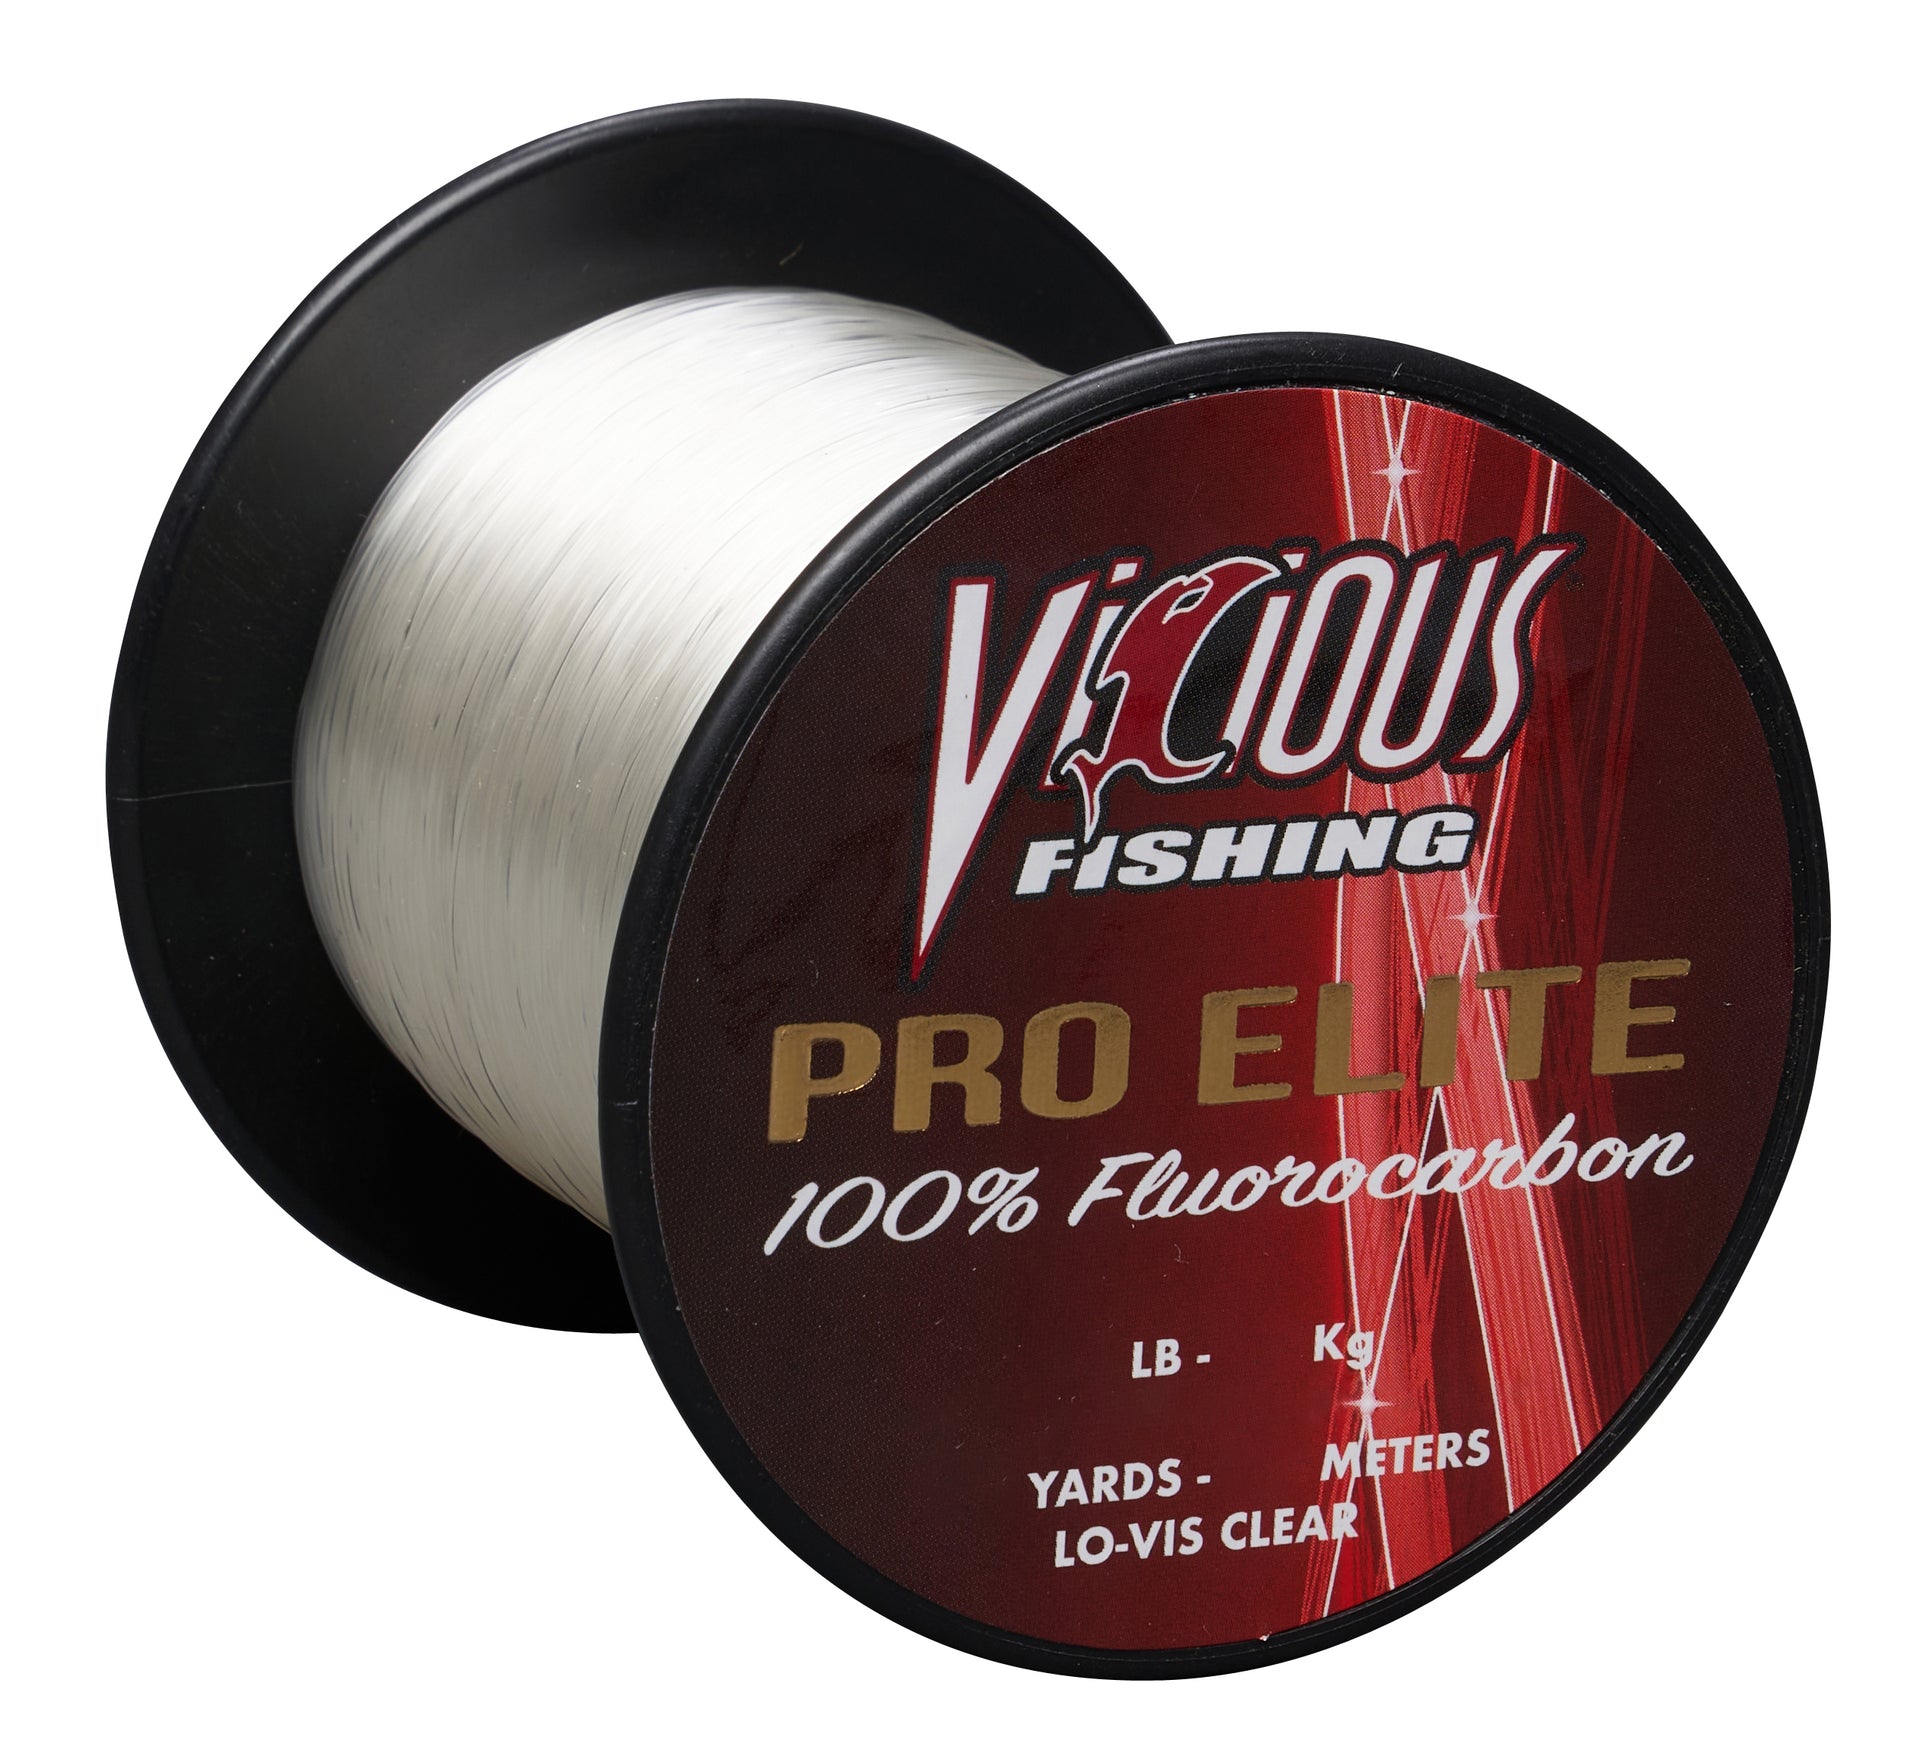  Vicious Fishing Pro Elite Fluorocarbon Fishing Line